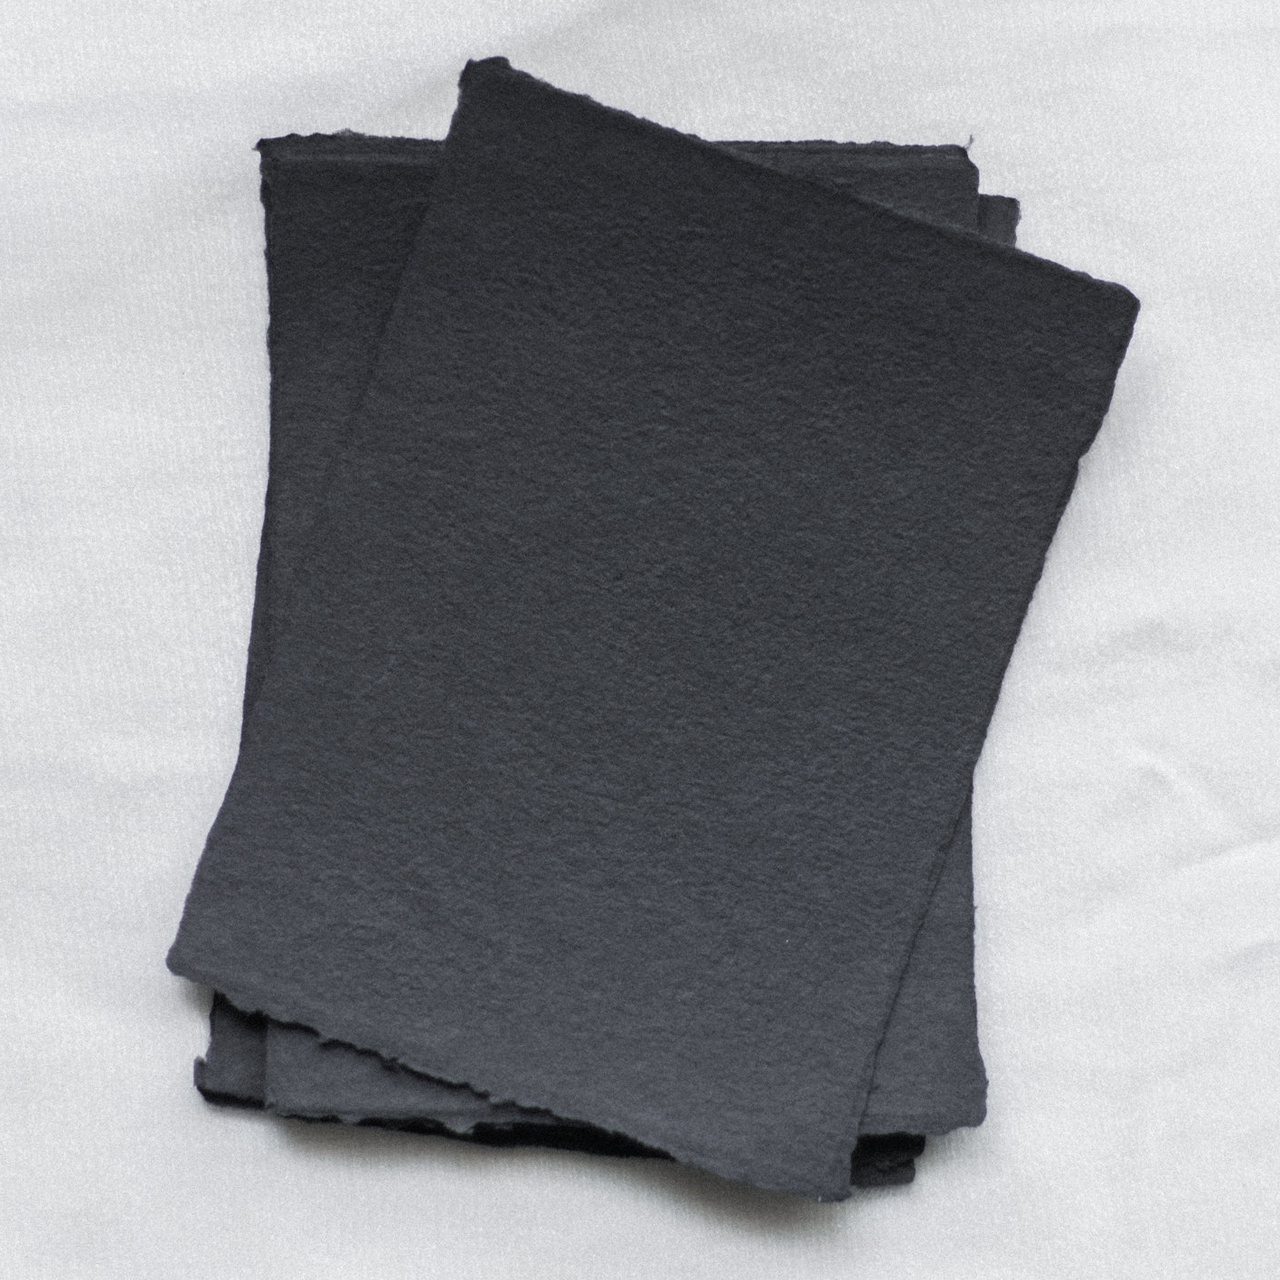 Spurlé Gul Studio Handmade Black Cotton Paper